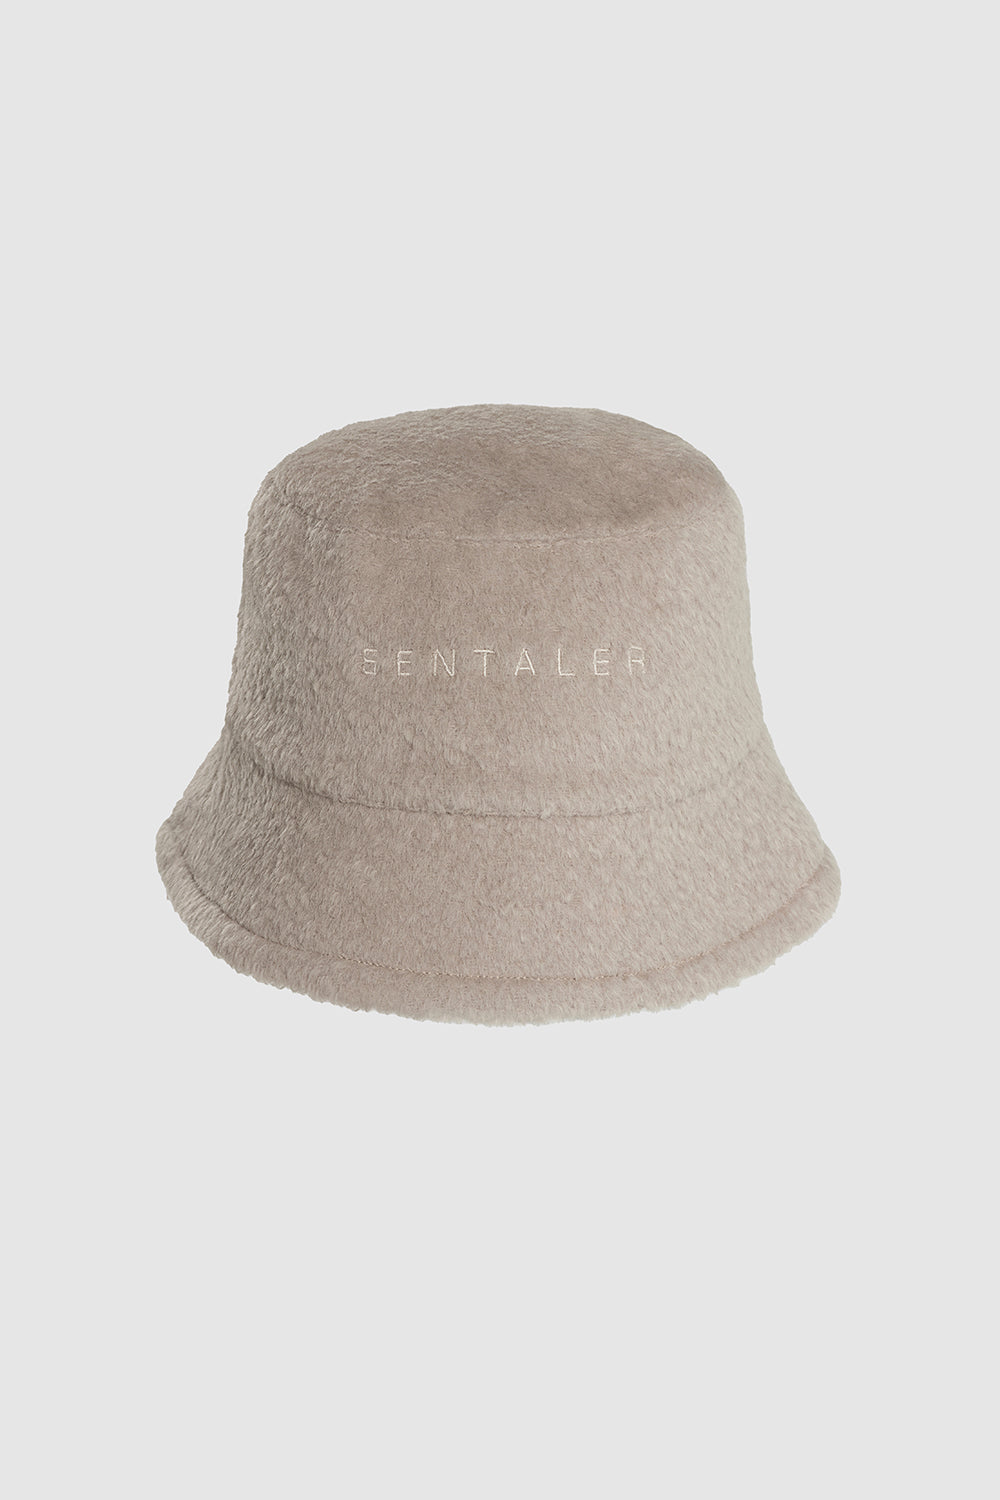 Bouclé Alpaca Bucket Hat in Sand - Size M/L